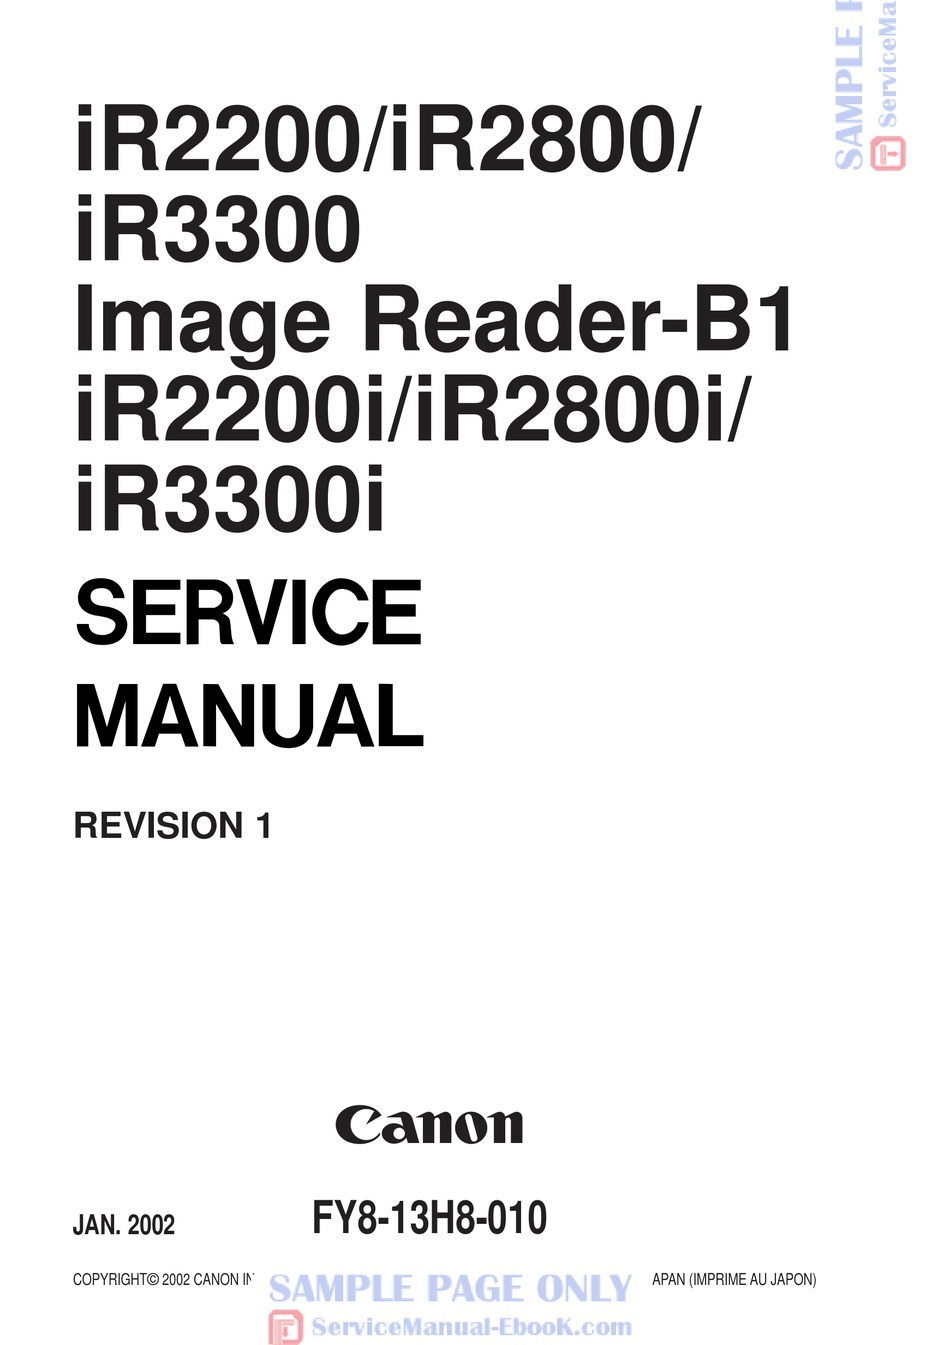 CANON IR2200 SERVICE MANUAL Pdf Download | ManualsLib